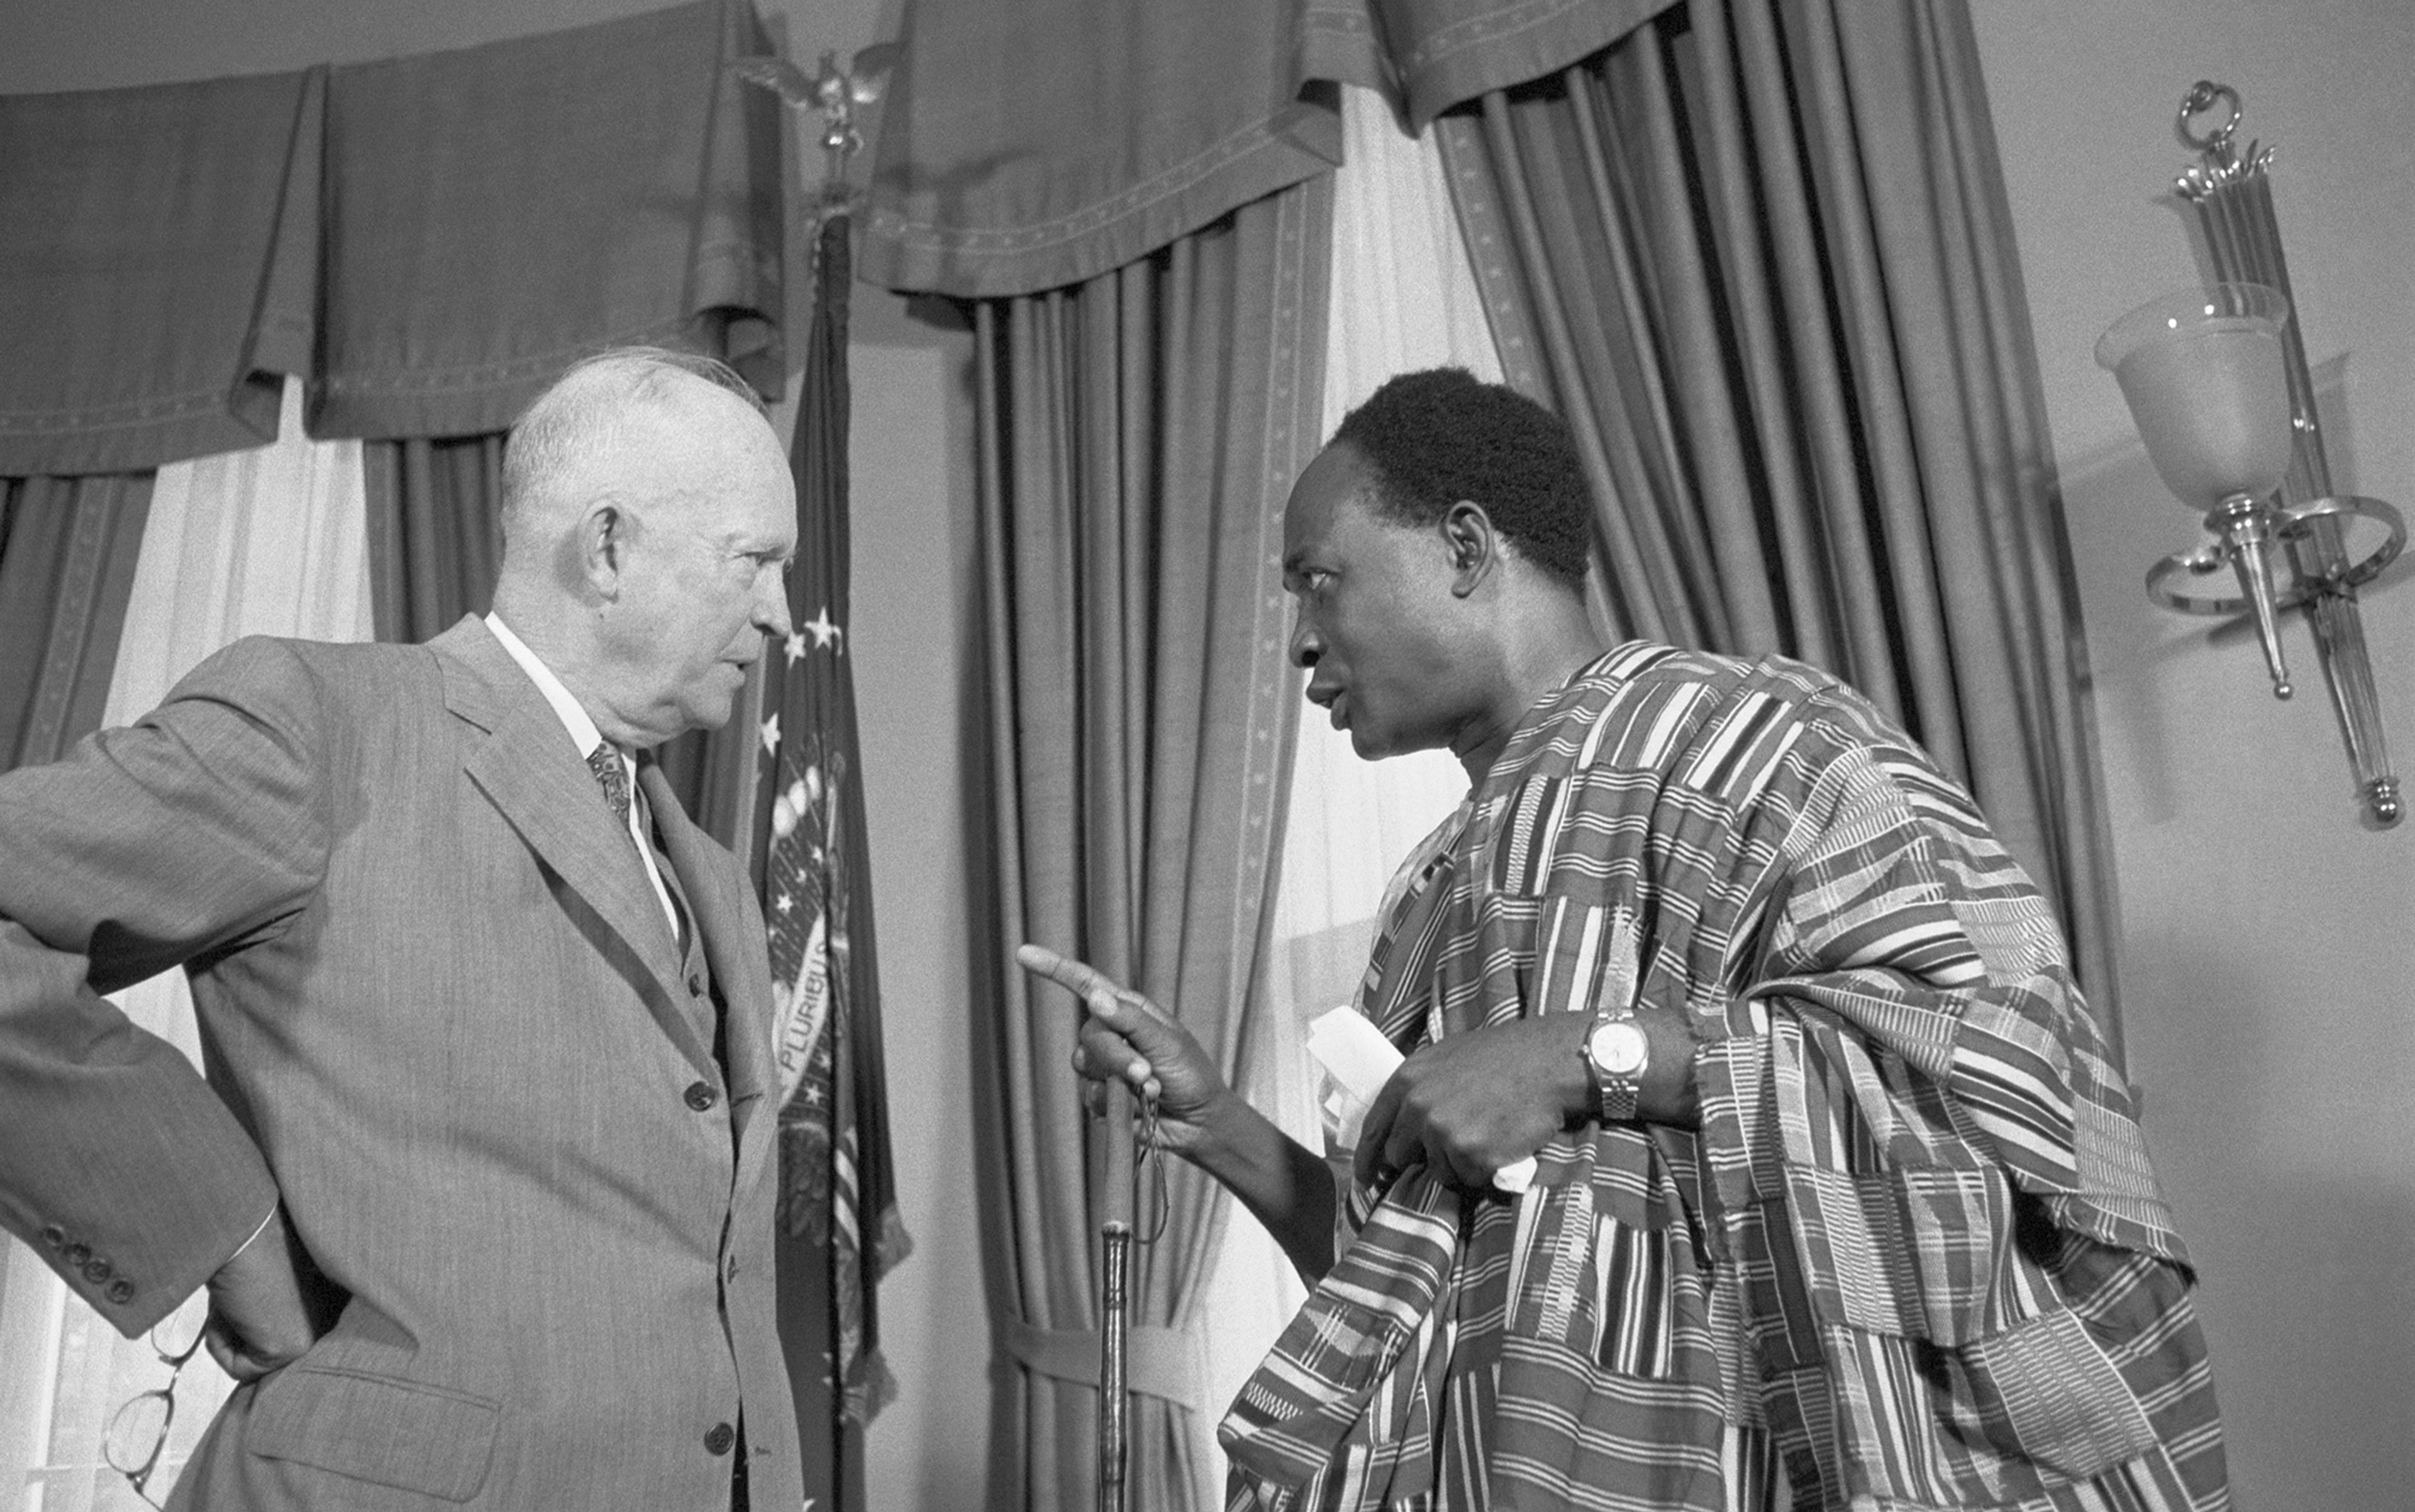 President Eisenhower and Kwame Nkrumah talking. Nkrumah is wearing traditional African attire and pointing at Eisenhower, who is wearing a suit.